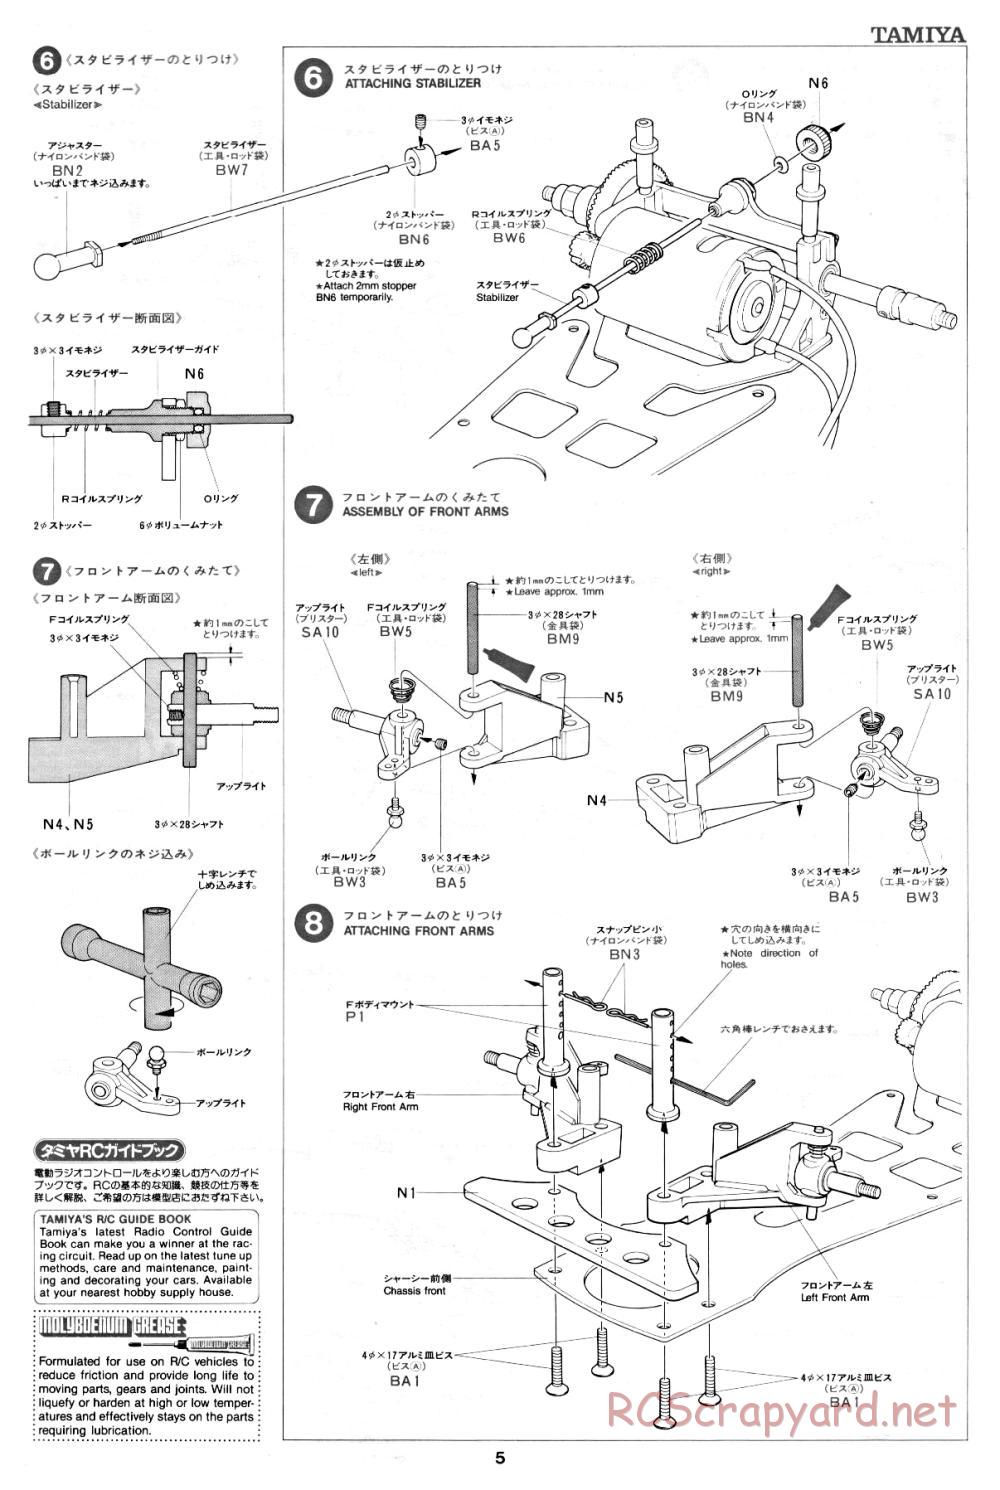 Tamiya - Toyota Tom's 84C - RM MK.6 - 58049 - Manual - Page 5